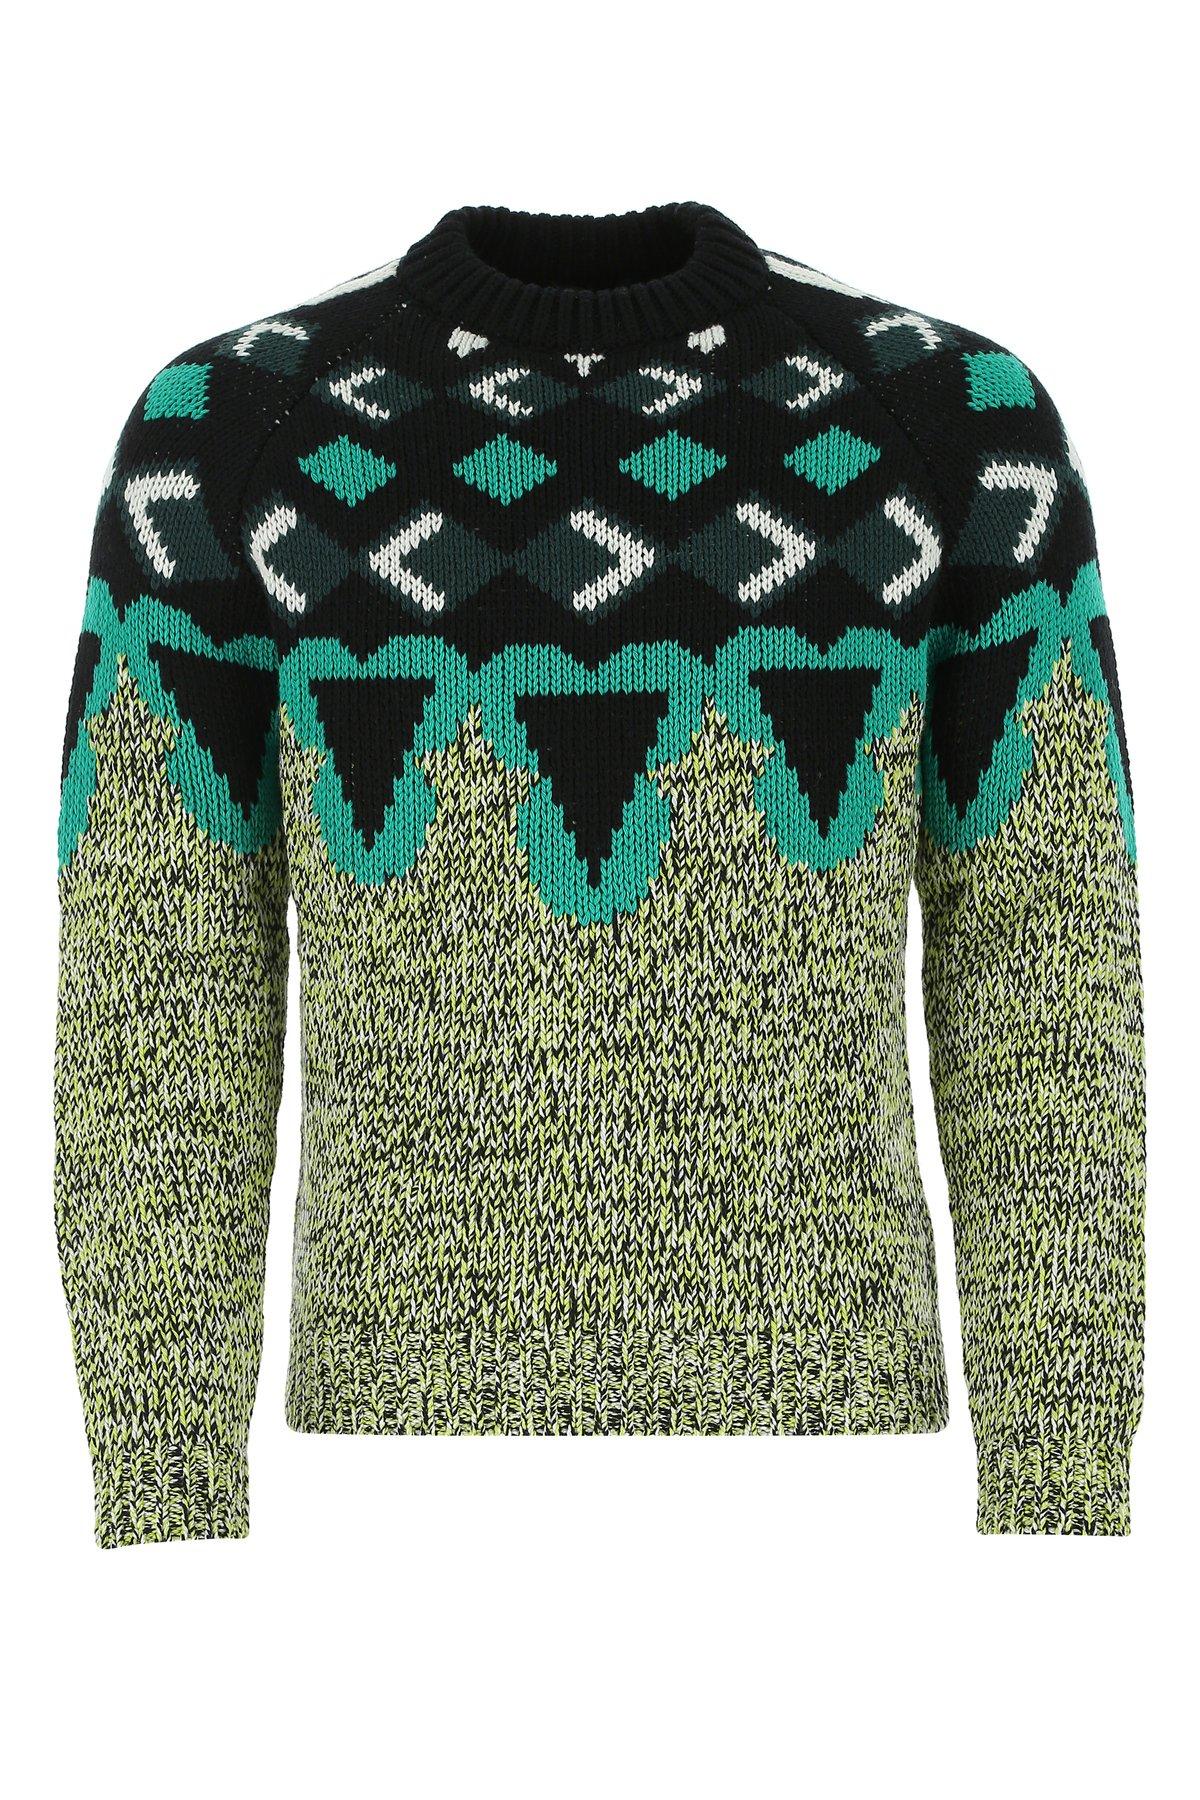 Prada Wool Geometric Intarsia Knit Sweater in Green for Men - Lyst